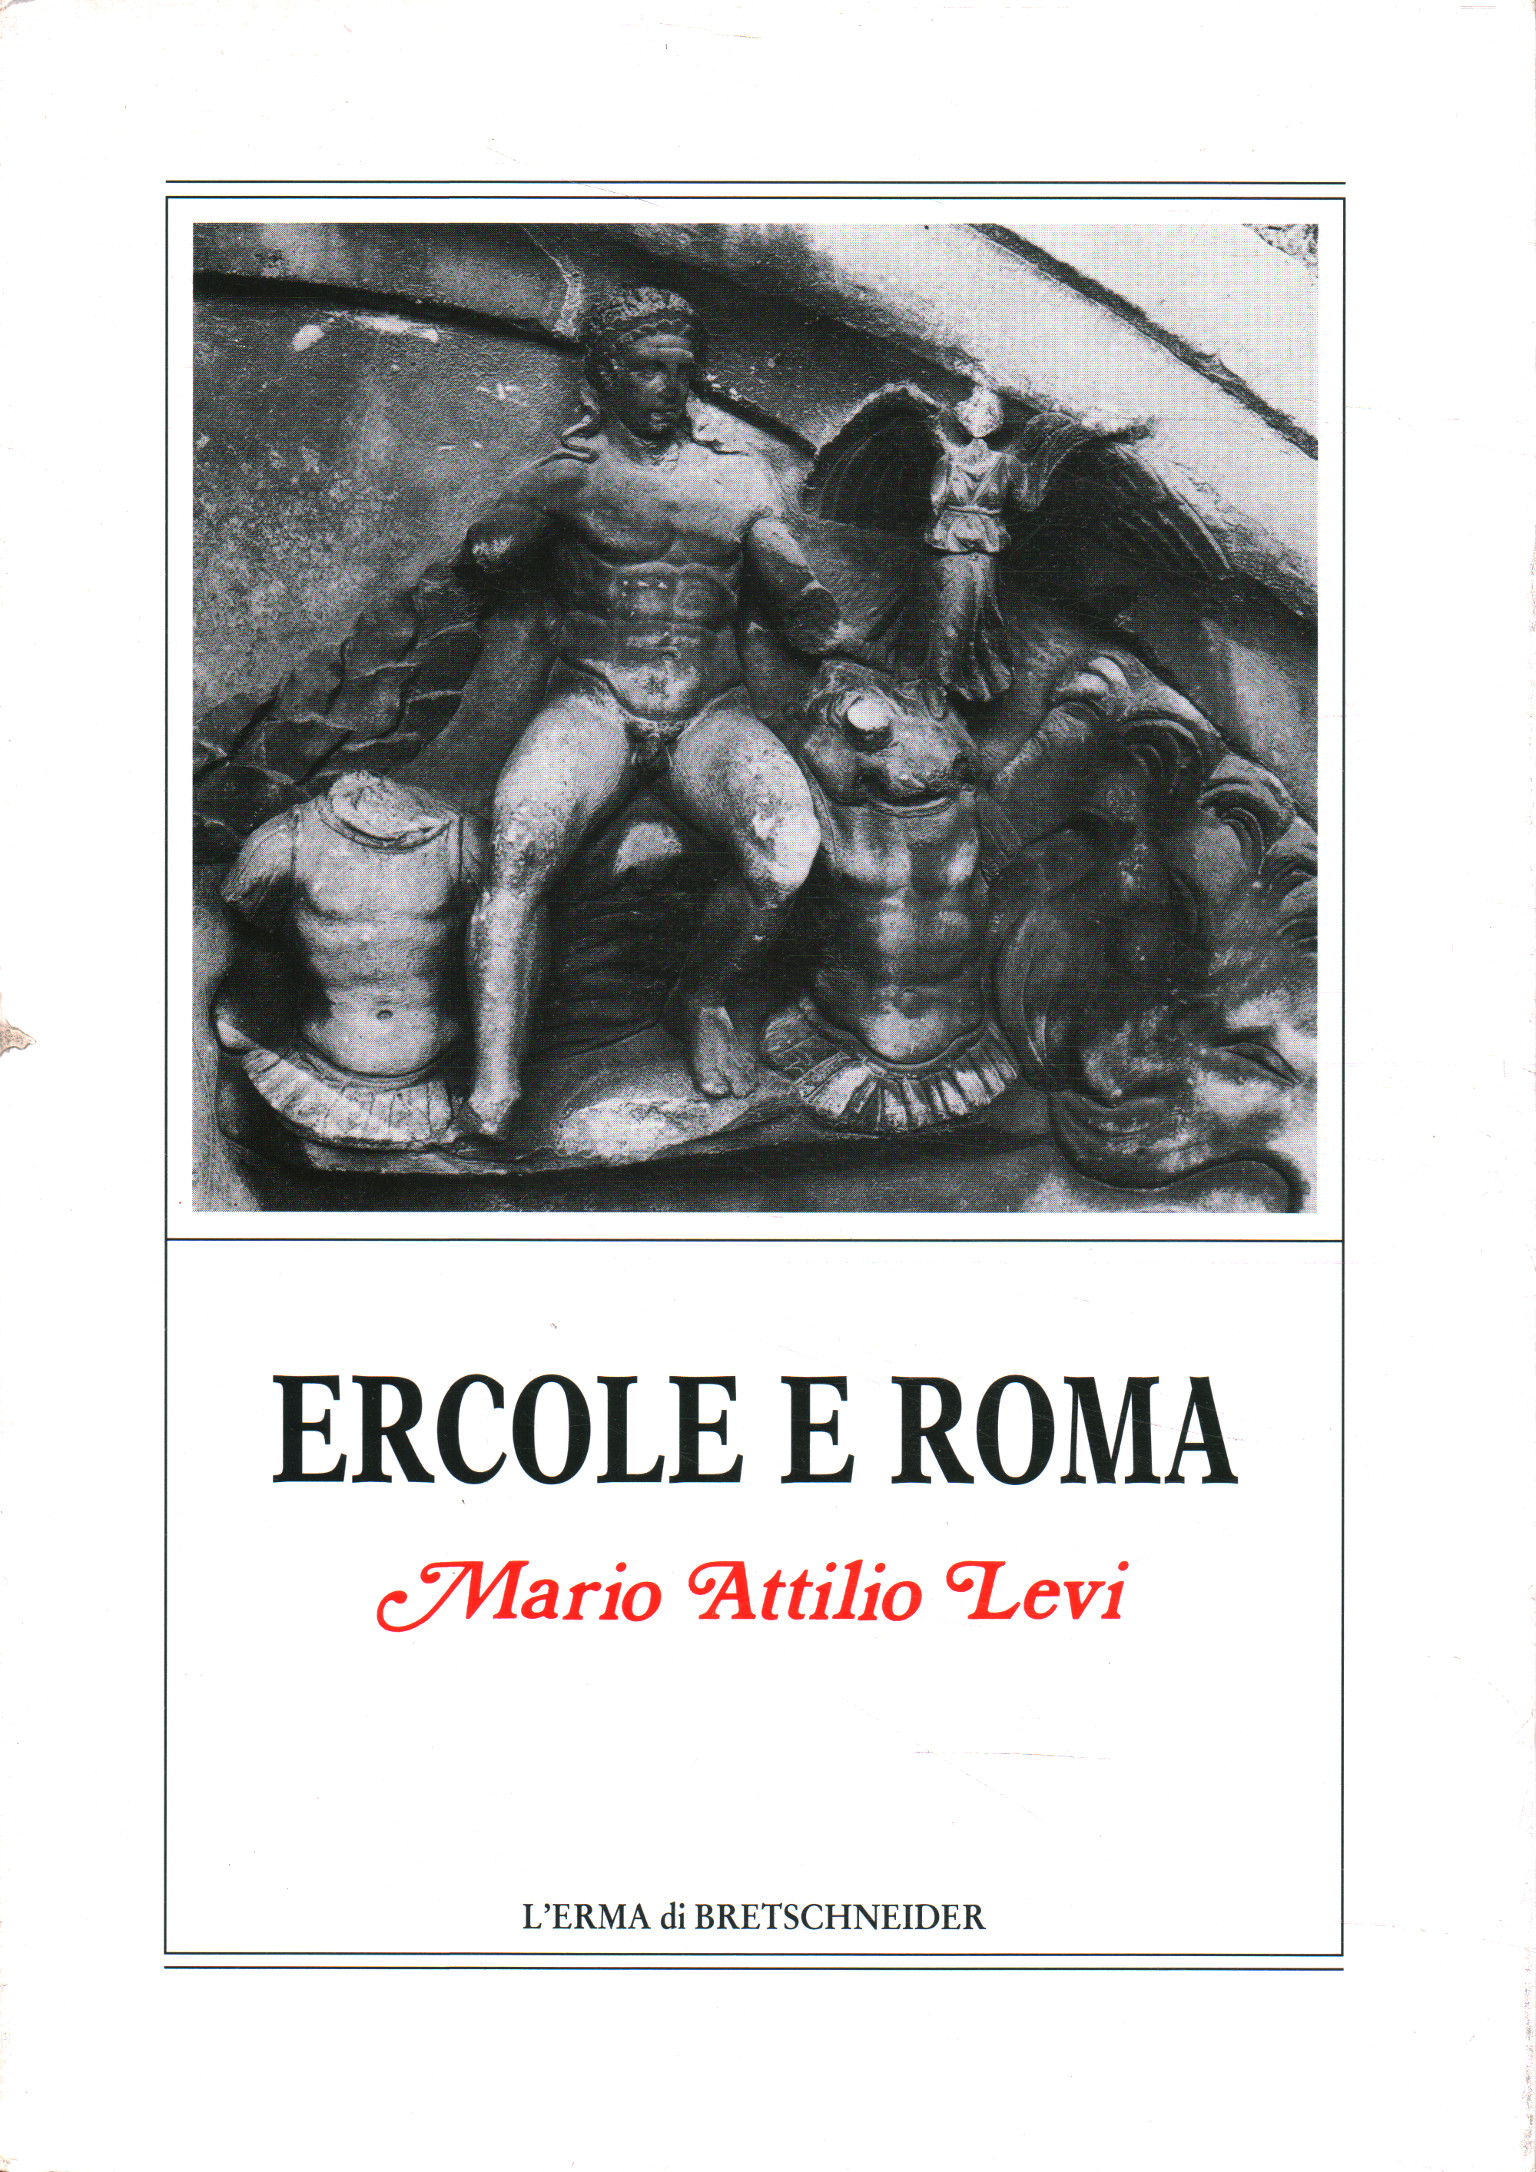 Hercules and Rome